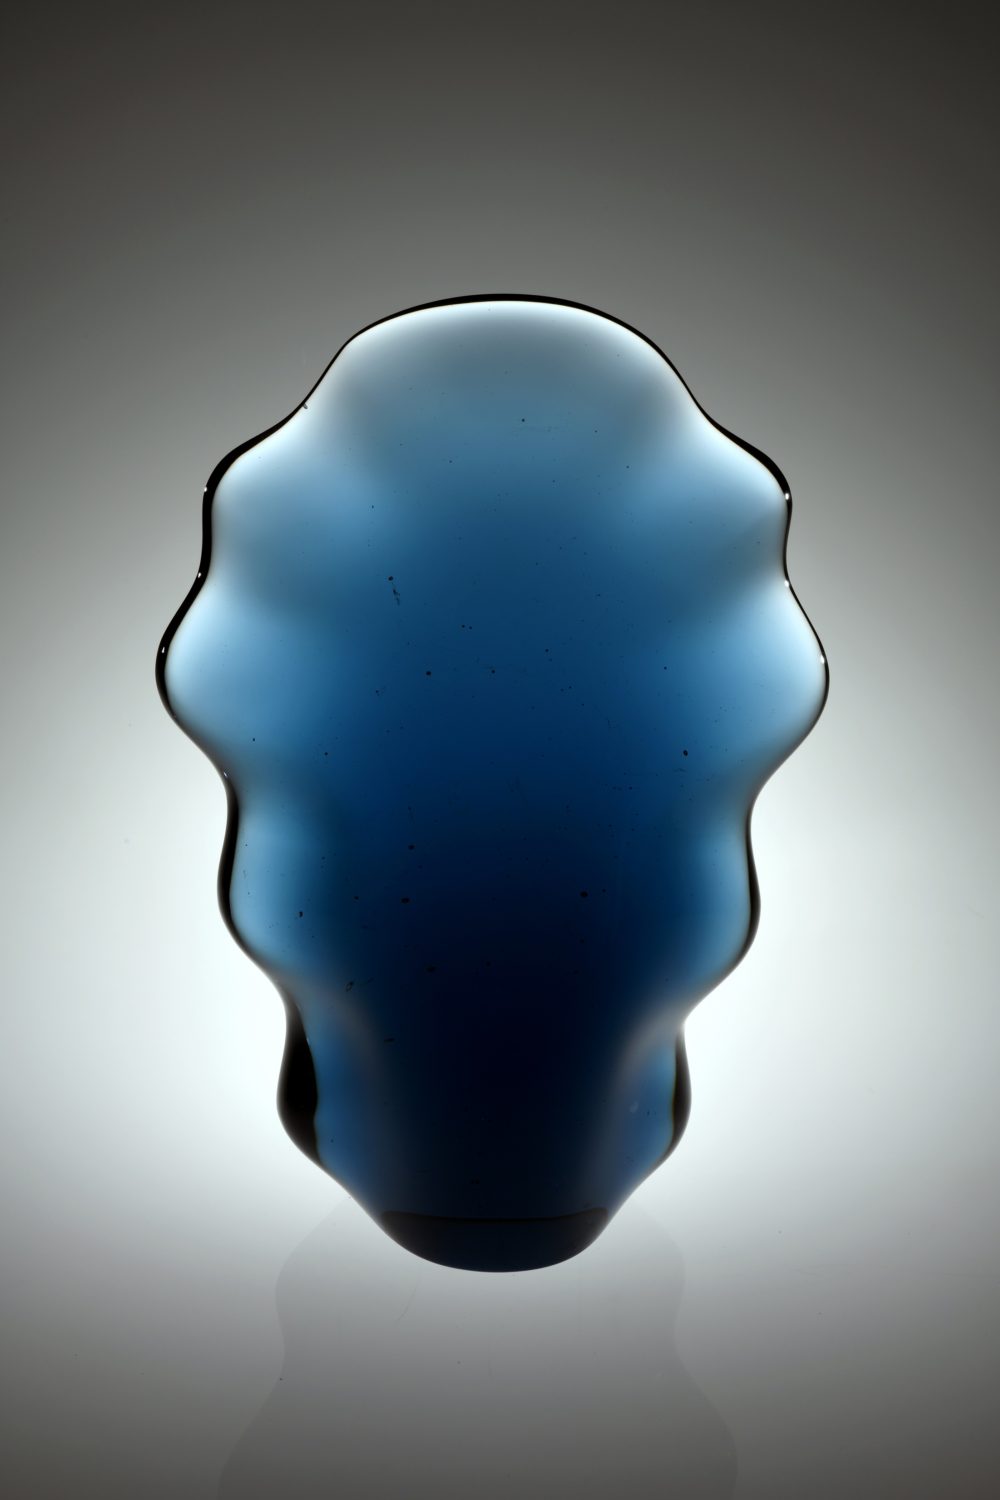 Nightblue Vibration 2020, dim.19x13.6x5.2 inch, 48x34x13 cm